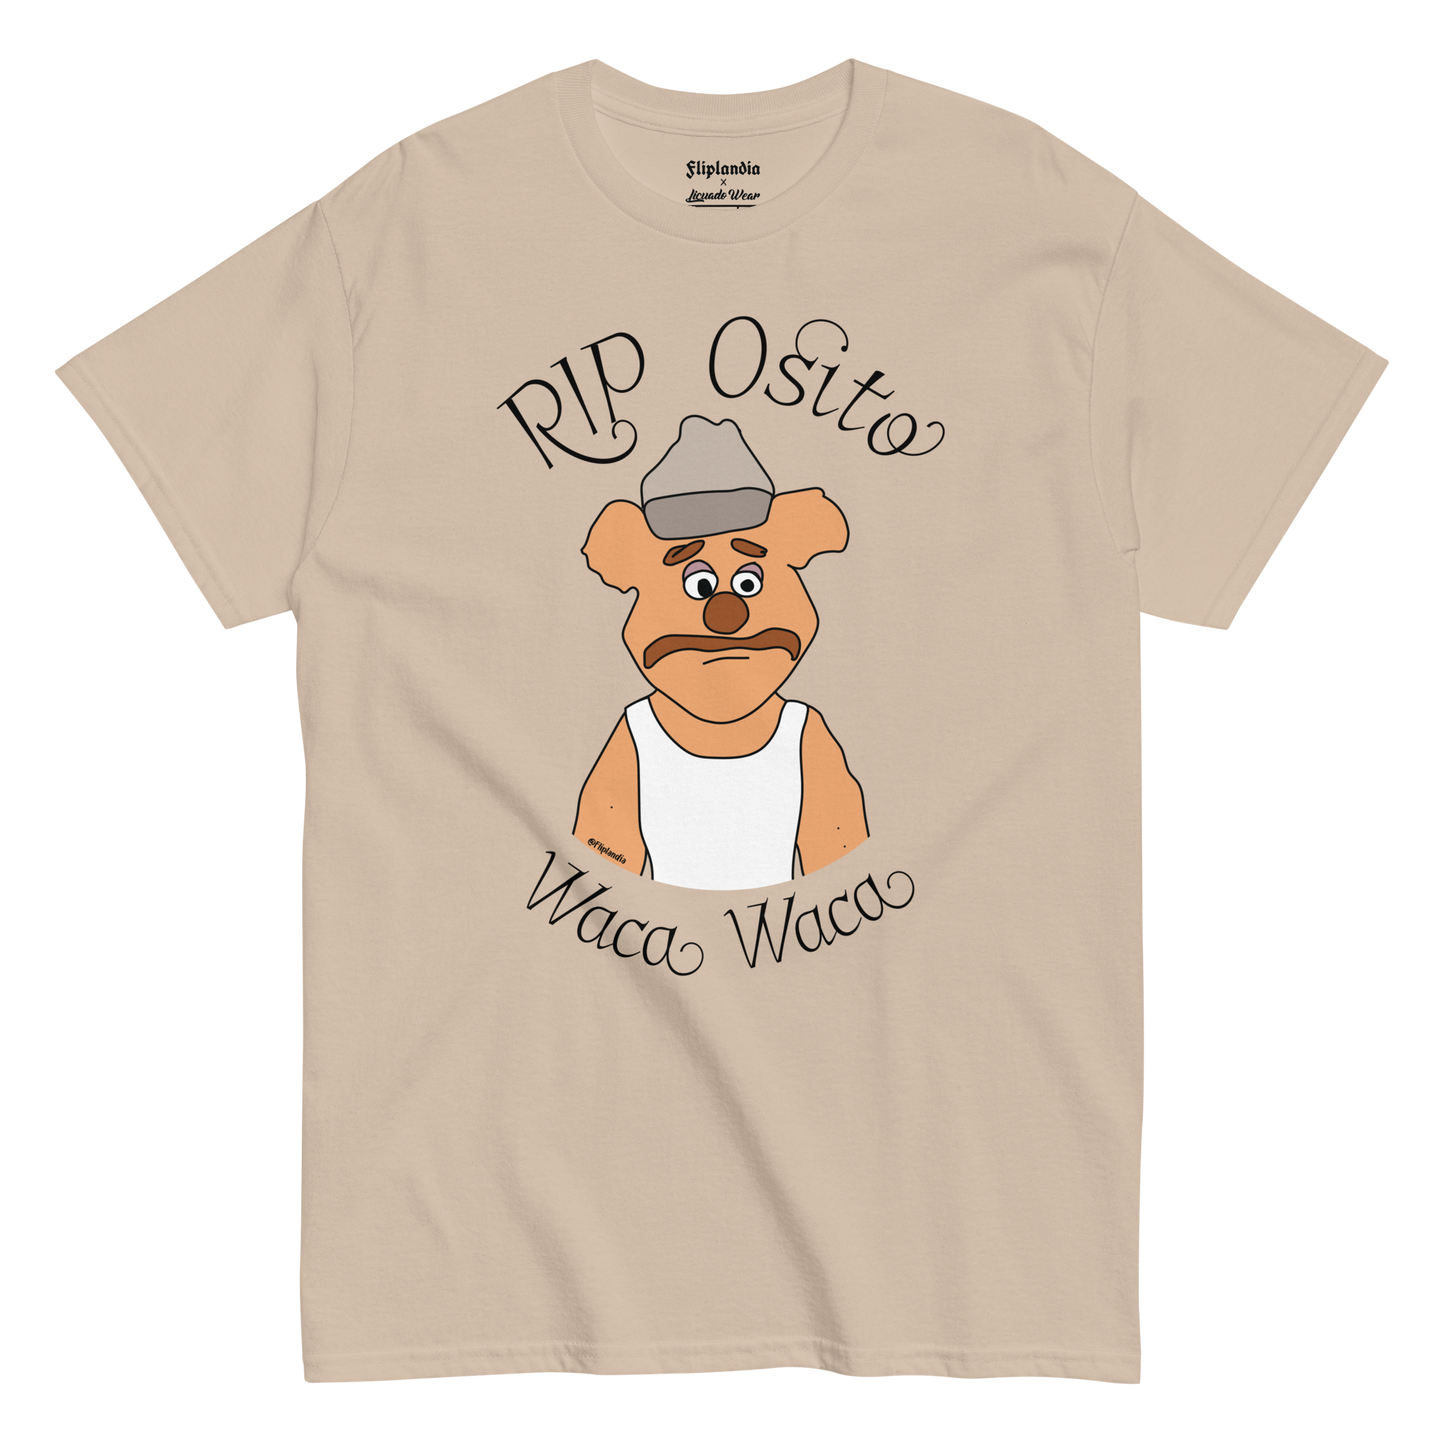 RIP Osito - Fliplandia Unisex T-shirt